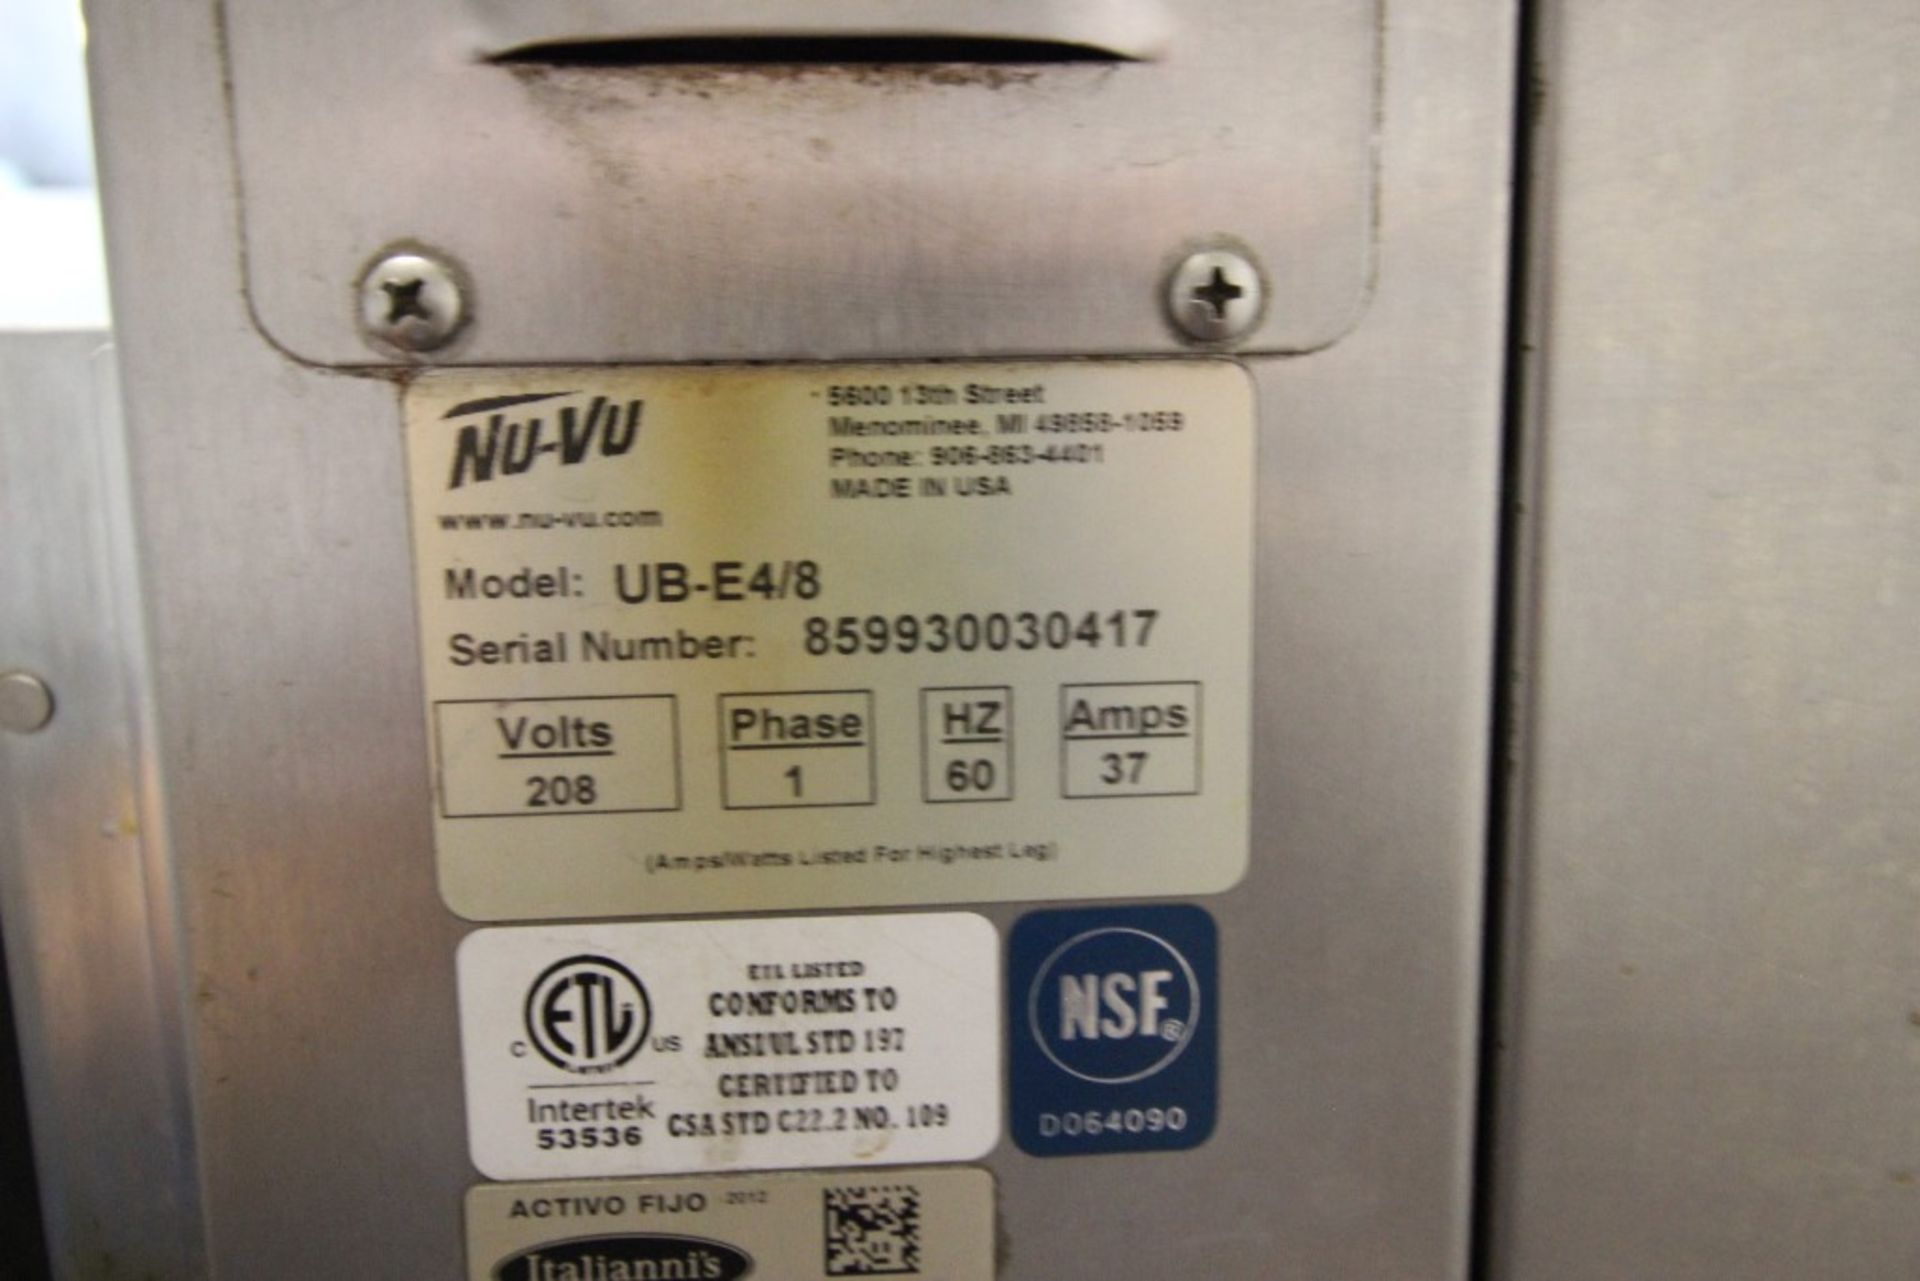 Fermentadora marca Nu-vu en acero inoxidable con medidas 0.80 x 0.76 x 1.83 m, modelo: UB-E4/8, núm - Image 18 of 28